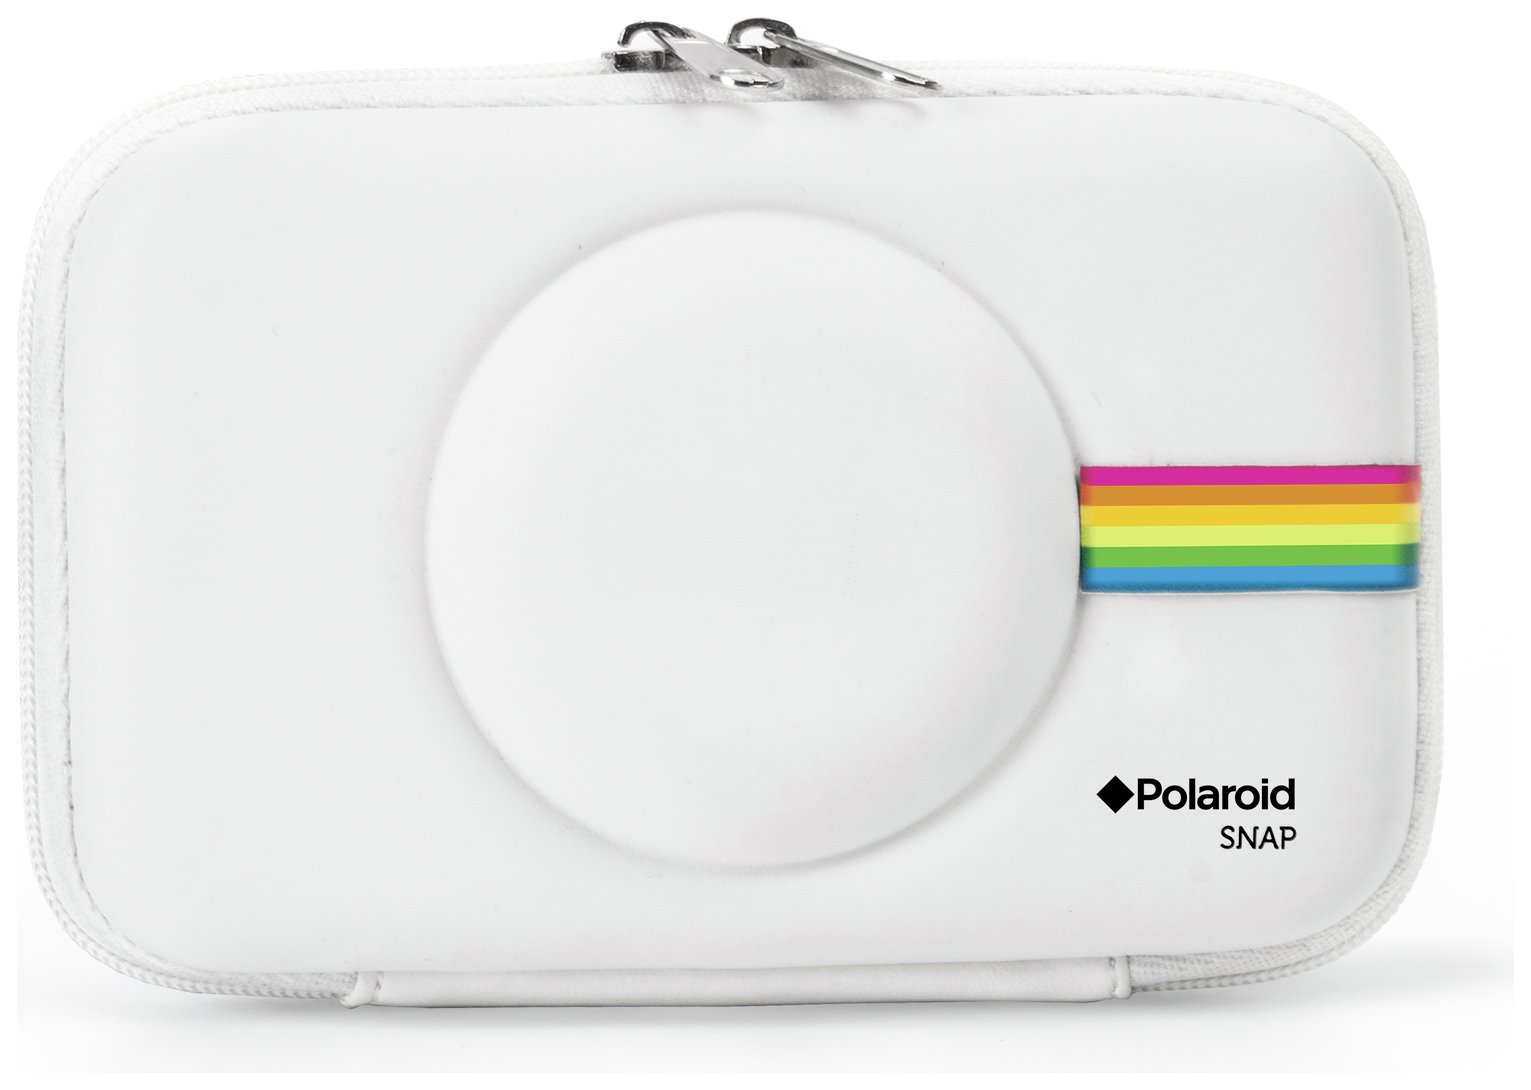 Polaroid PLSNAPEVAW Snap Camera Case review